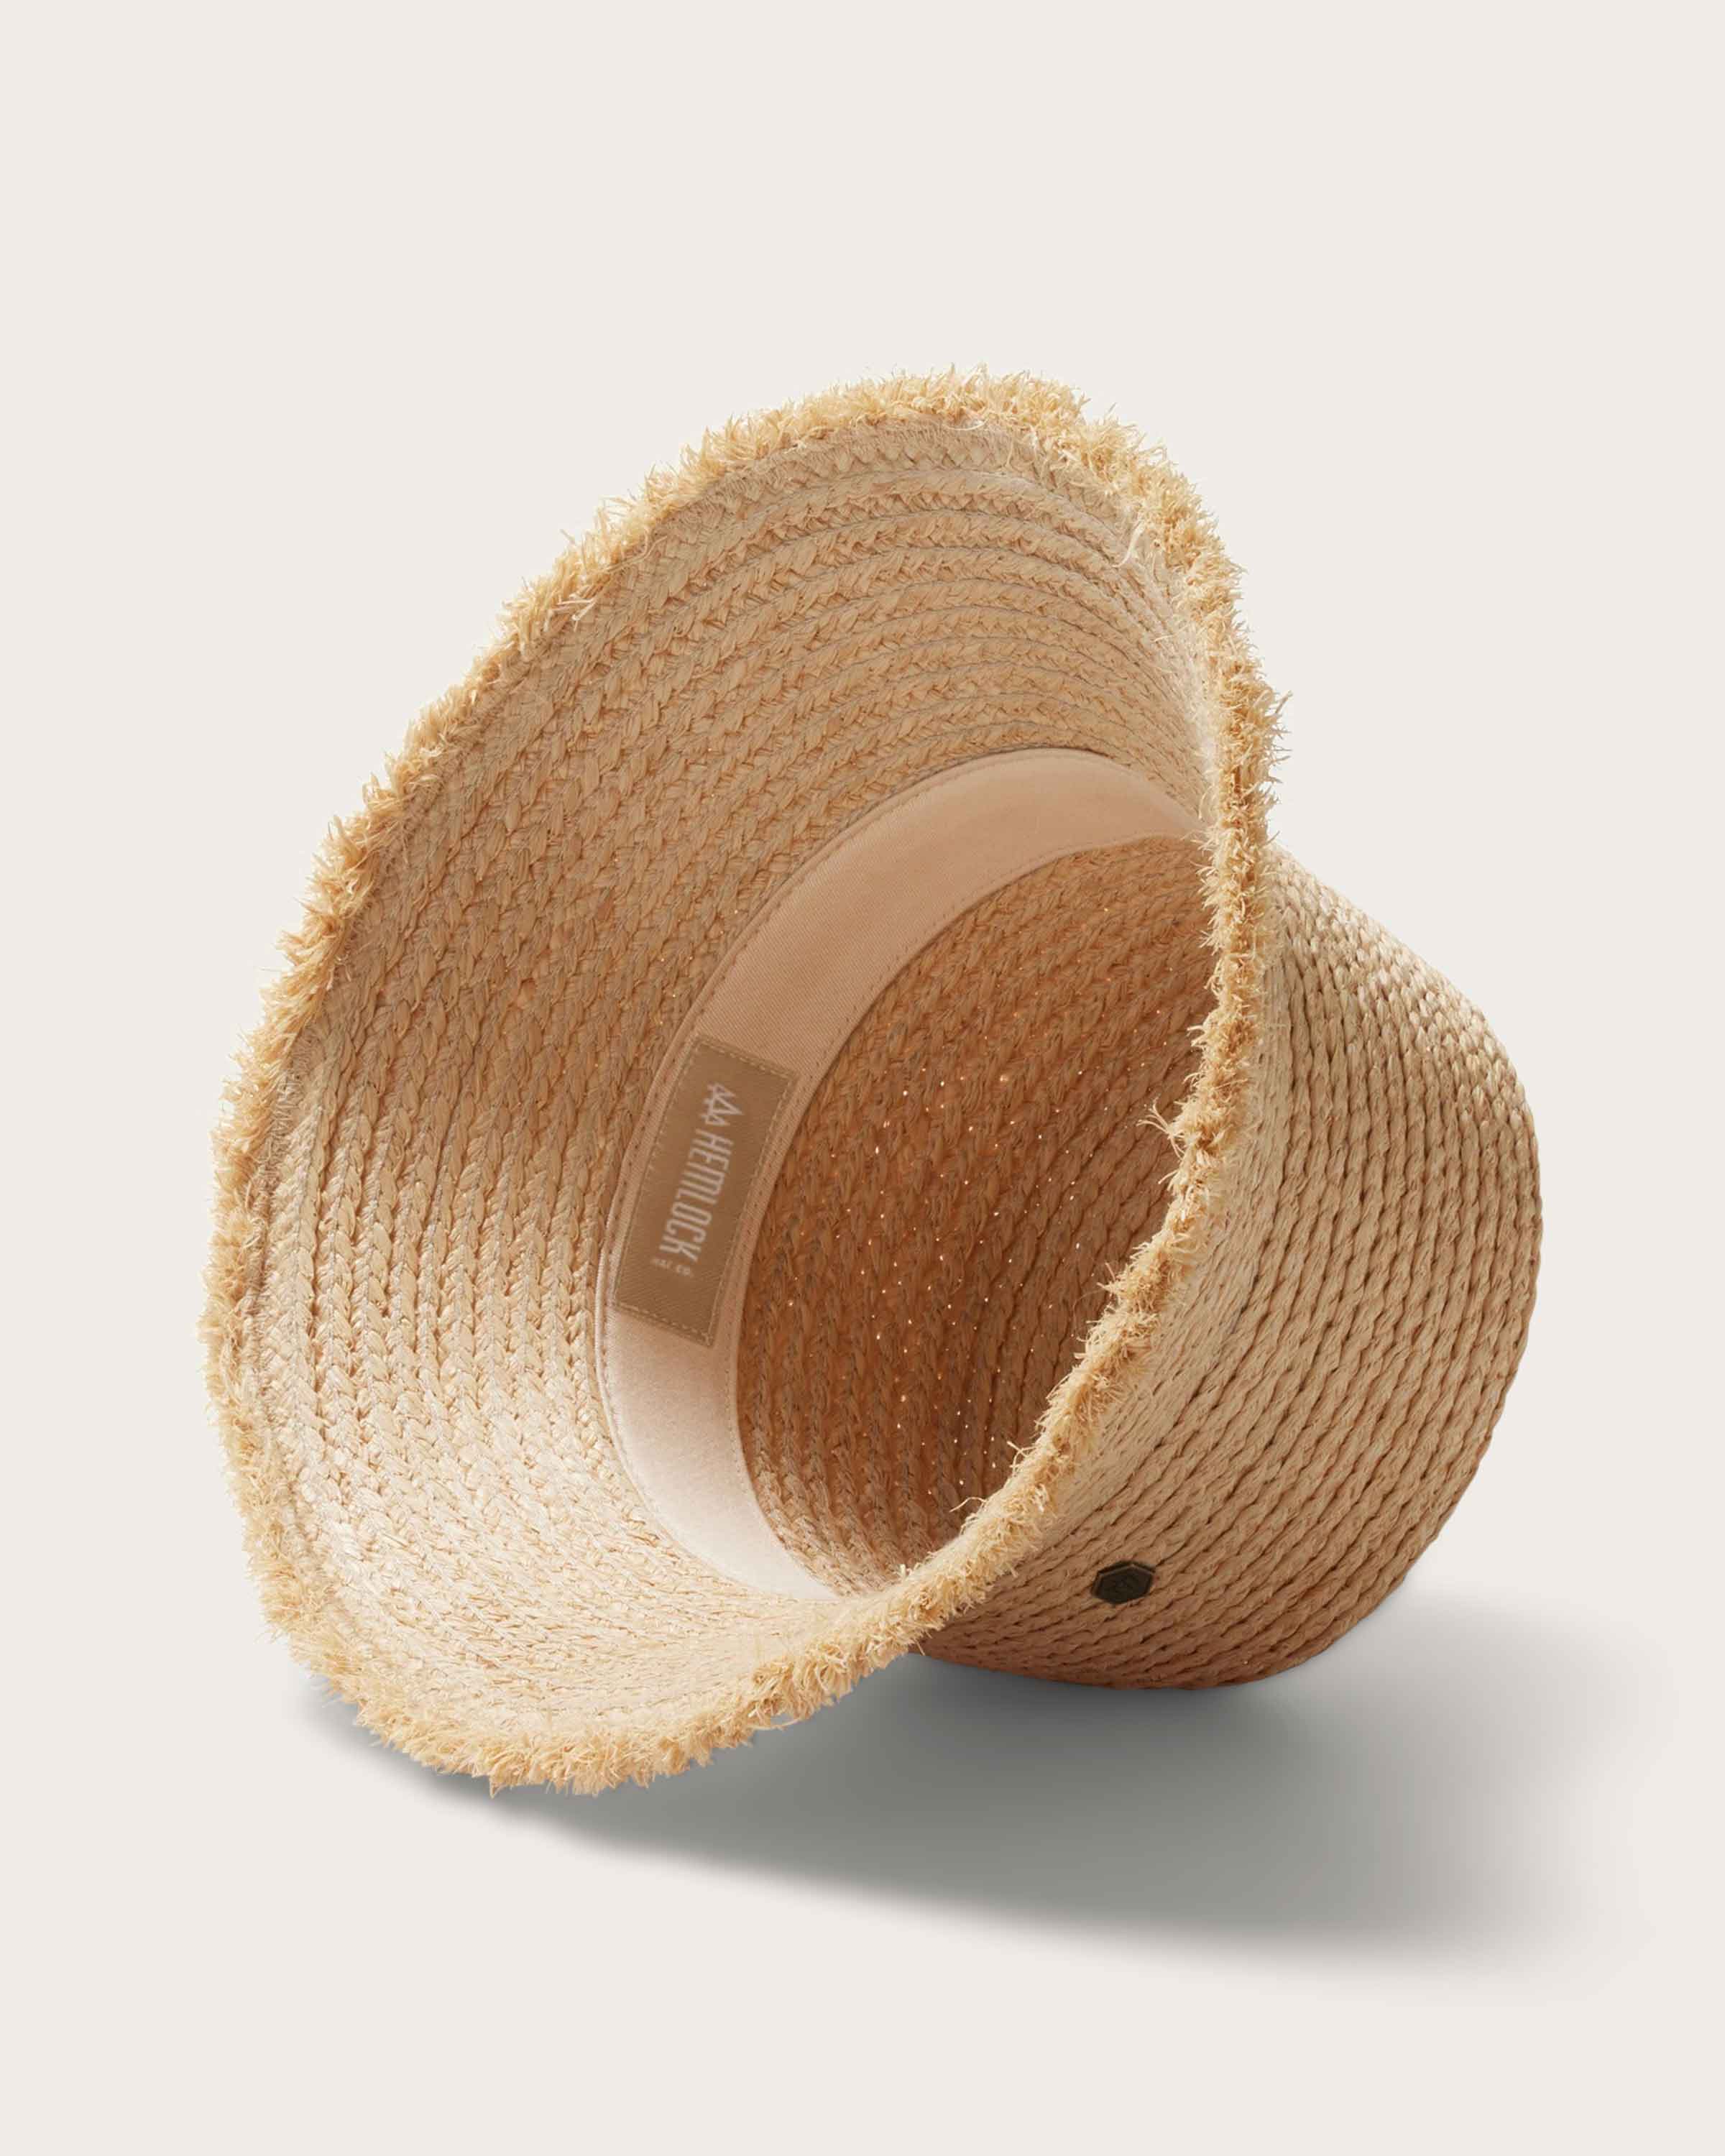 Hemlock Lenny Straw Bucket Hat in Natural detail